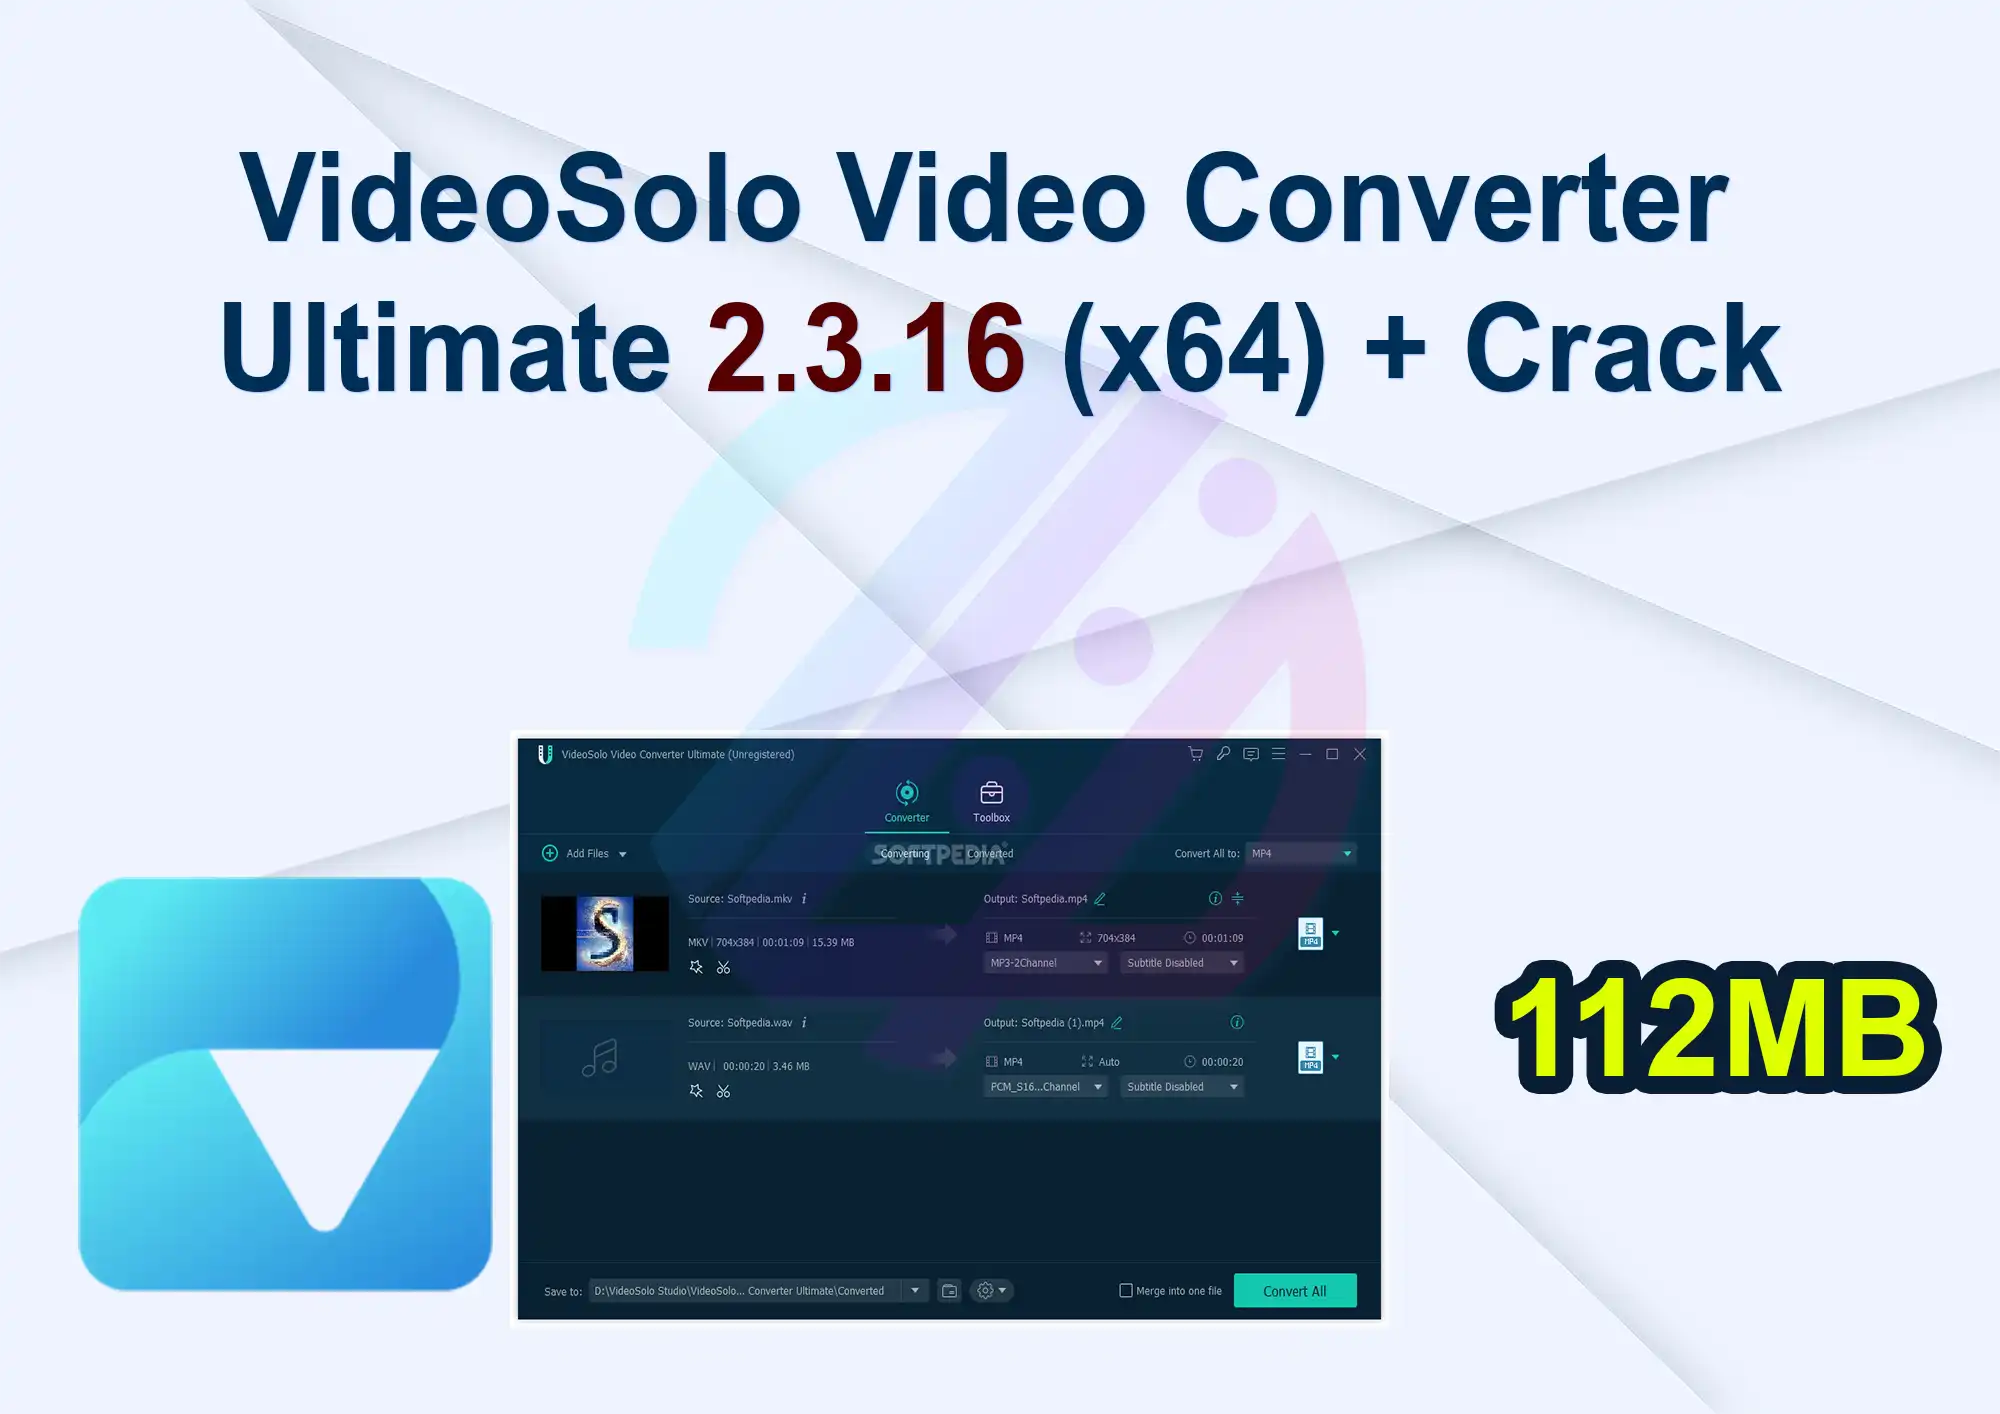 VideoSolo Video Converter Ultimate 2.3.16 (x64) + Crack